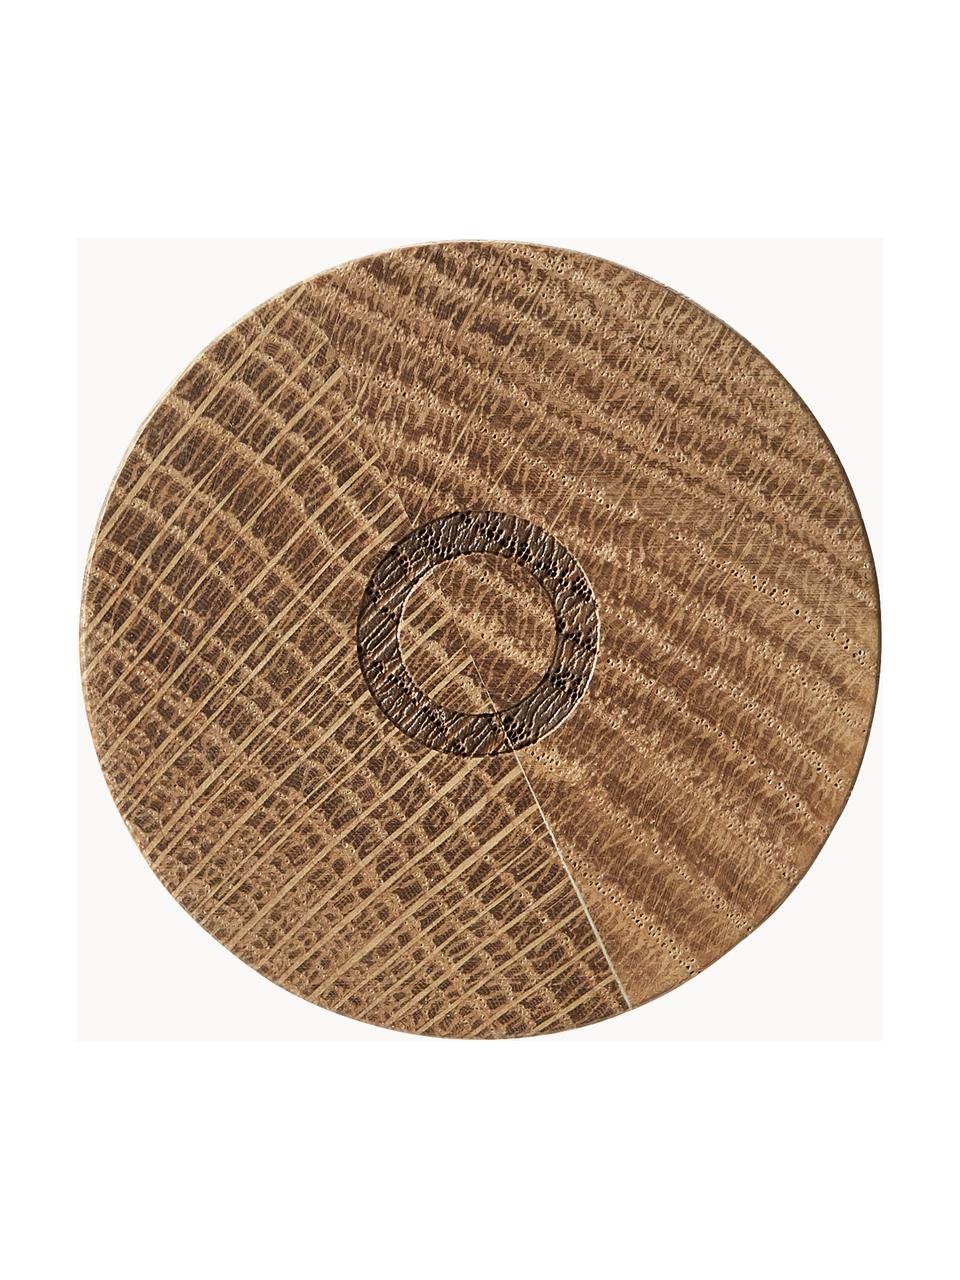 Zout- en pepermolen Bitz met houten deksel, 2-delig, Deksel: hout, Donkergroen, gespikkeld, Ø 5 x H 17 cm